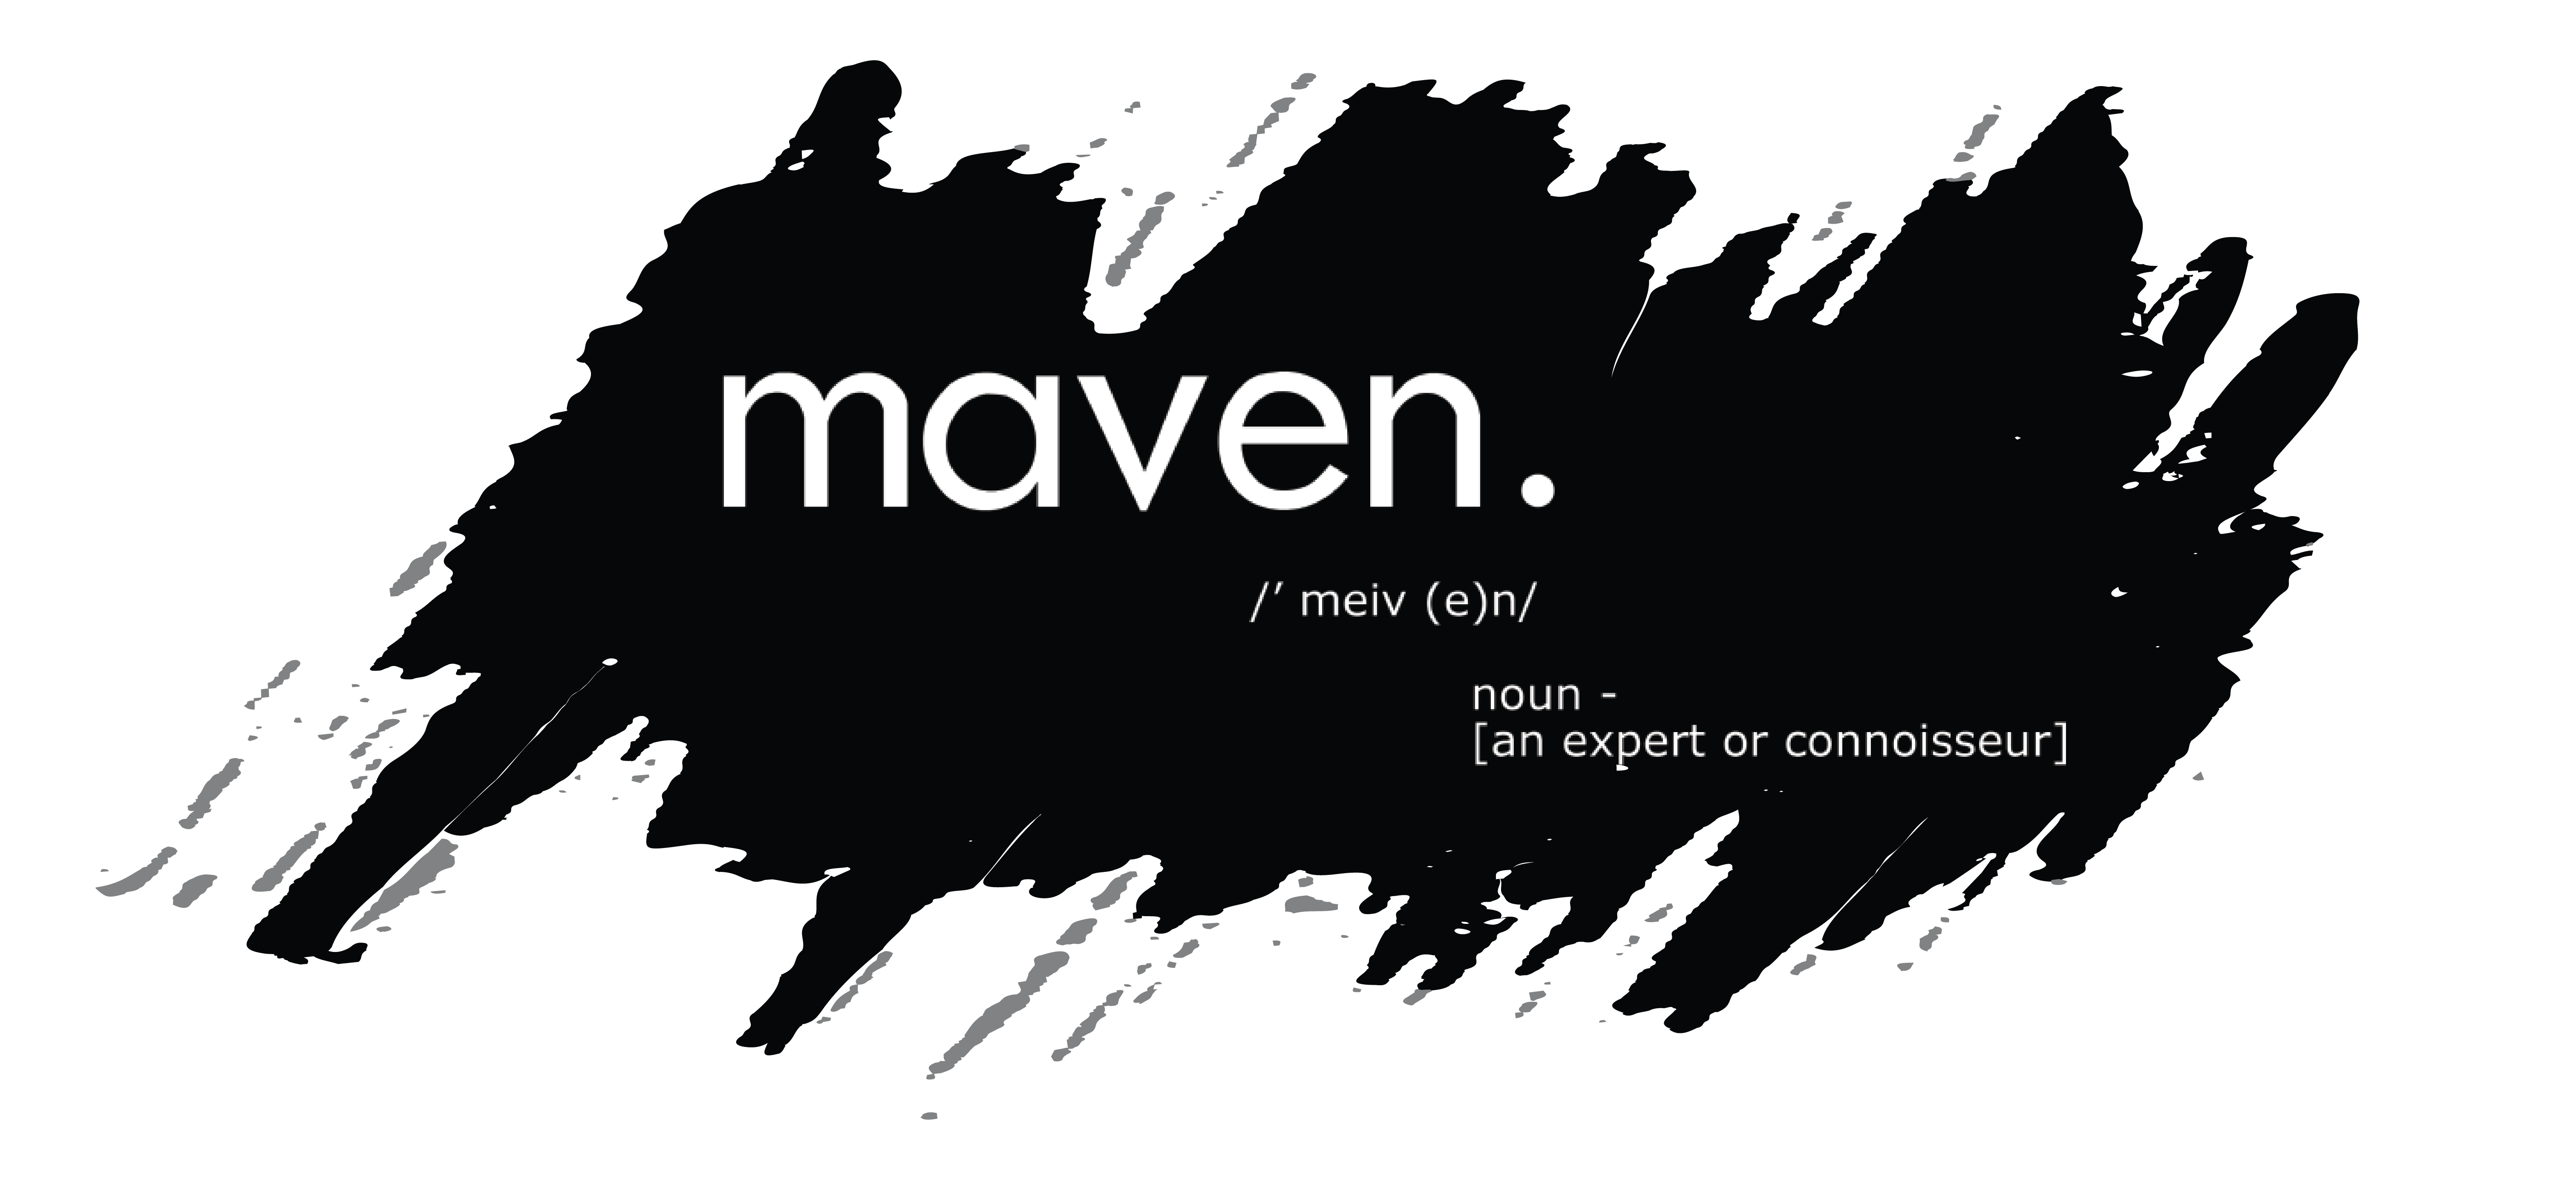 Profiles in Maven - How to Build Maven Profile ? - DevOpsSchool.com